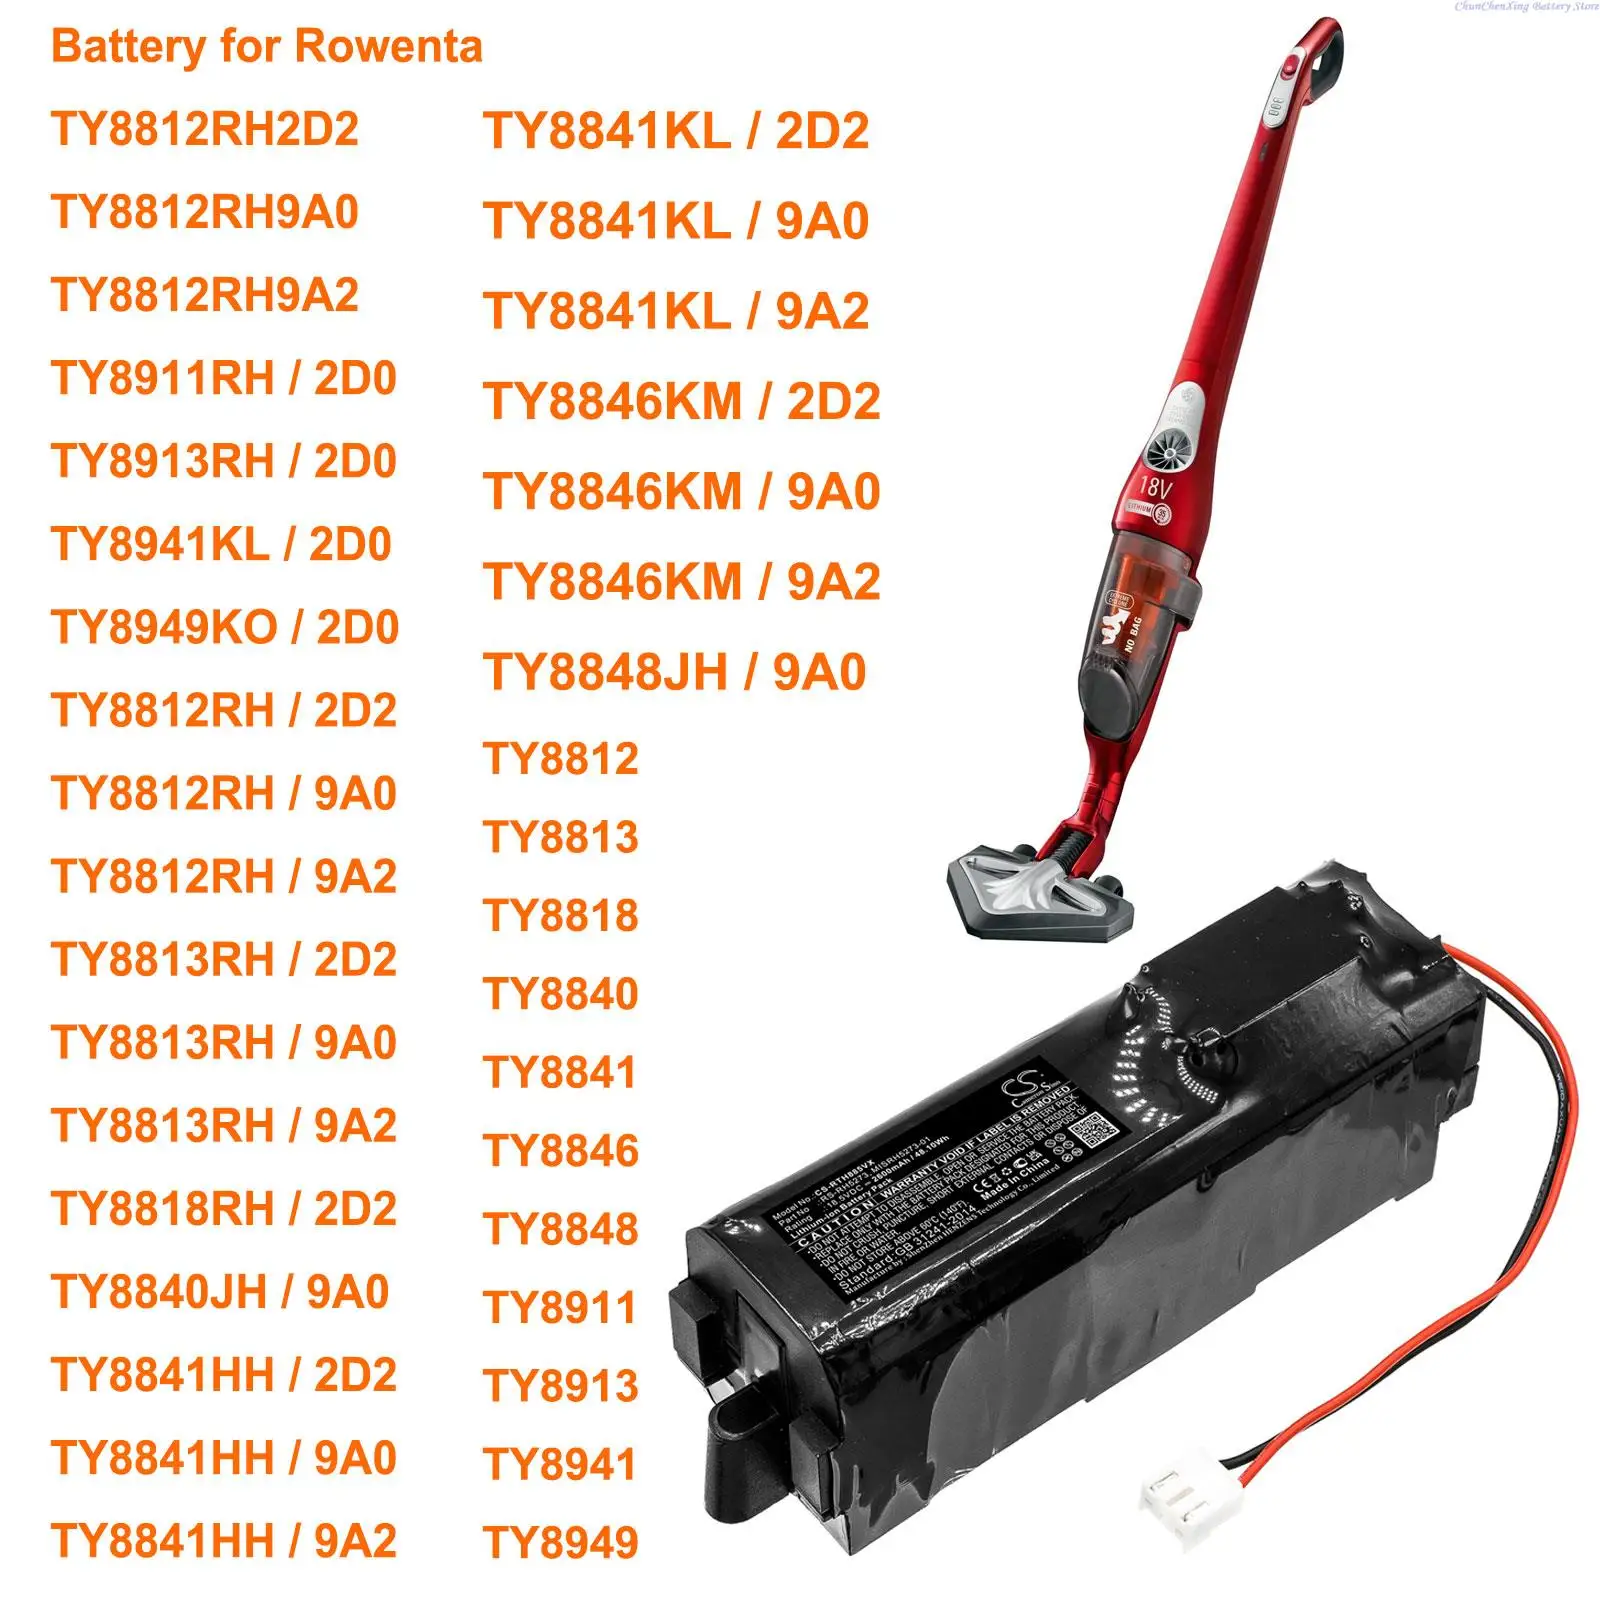 

OrangeYu 2600mAh Vacuum Battery for Rowenta TY8813,TY8818,TY8840,TY8841,TY8846,TY8848,TY8911,TY8913,TY8941,TY8949,TY8812